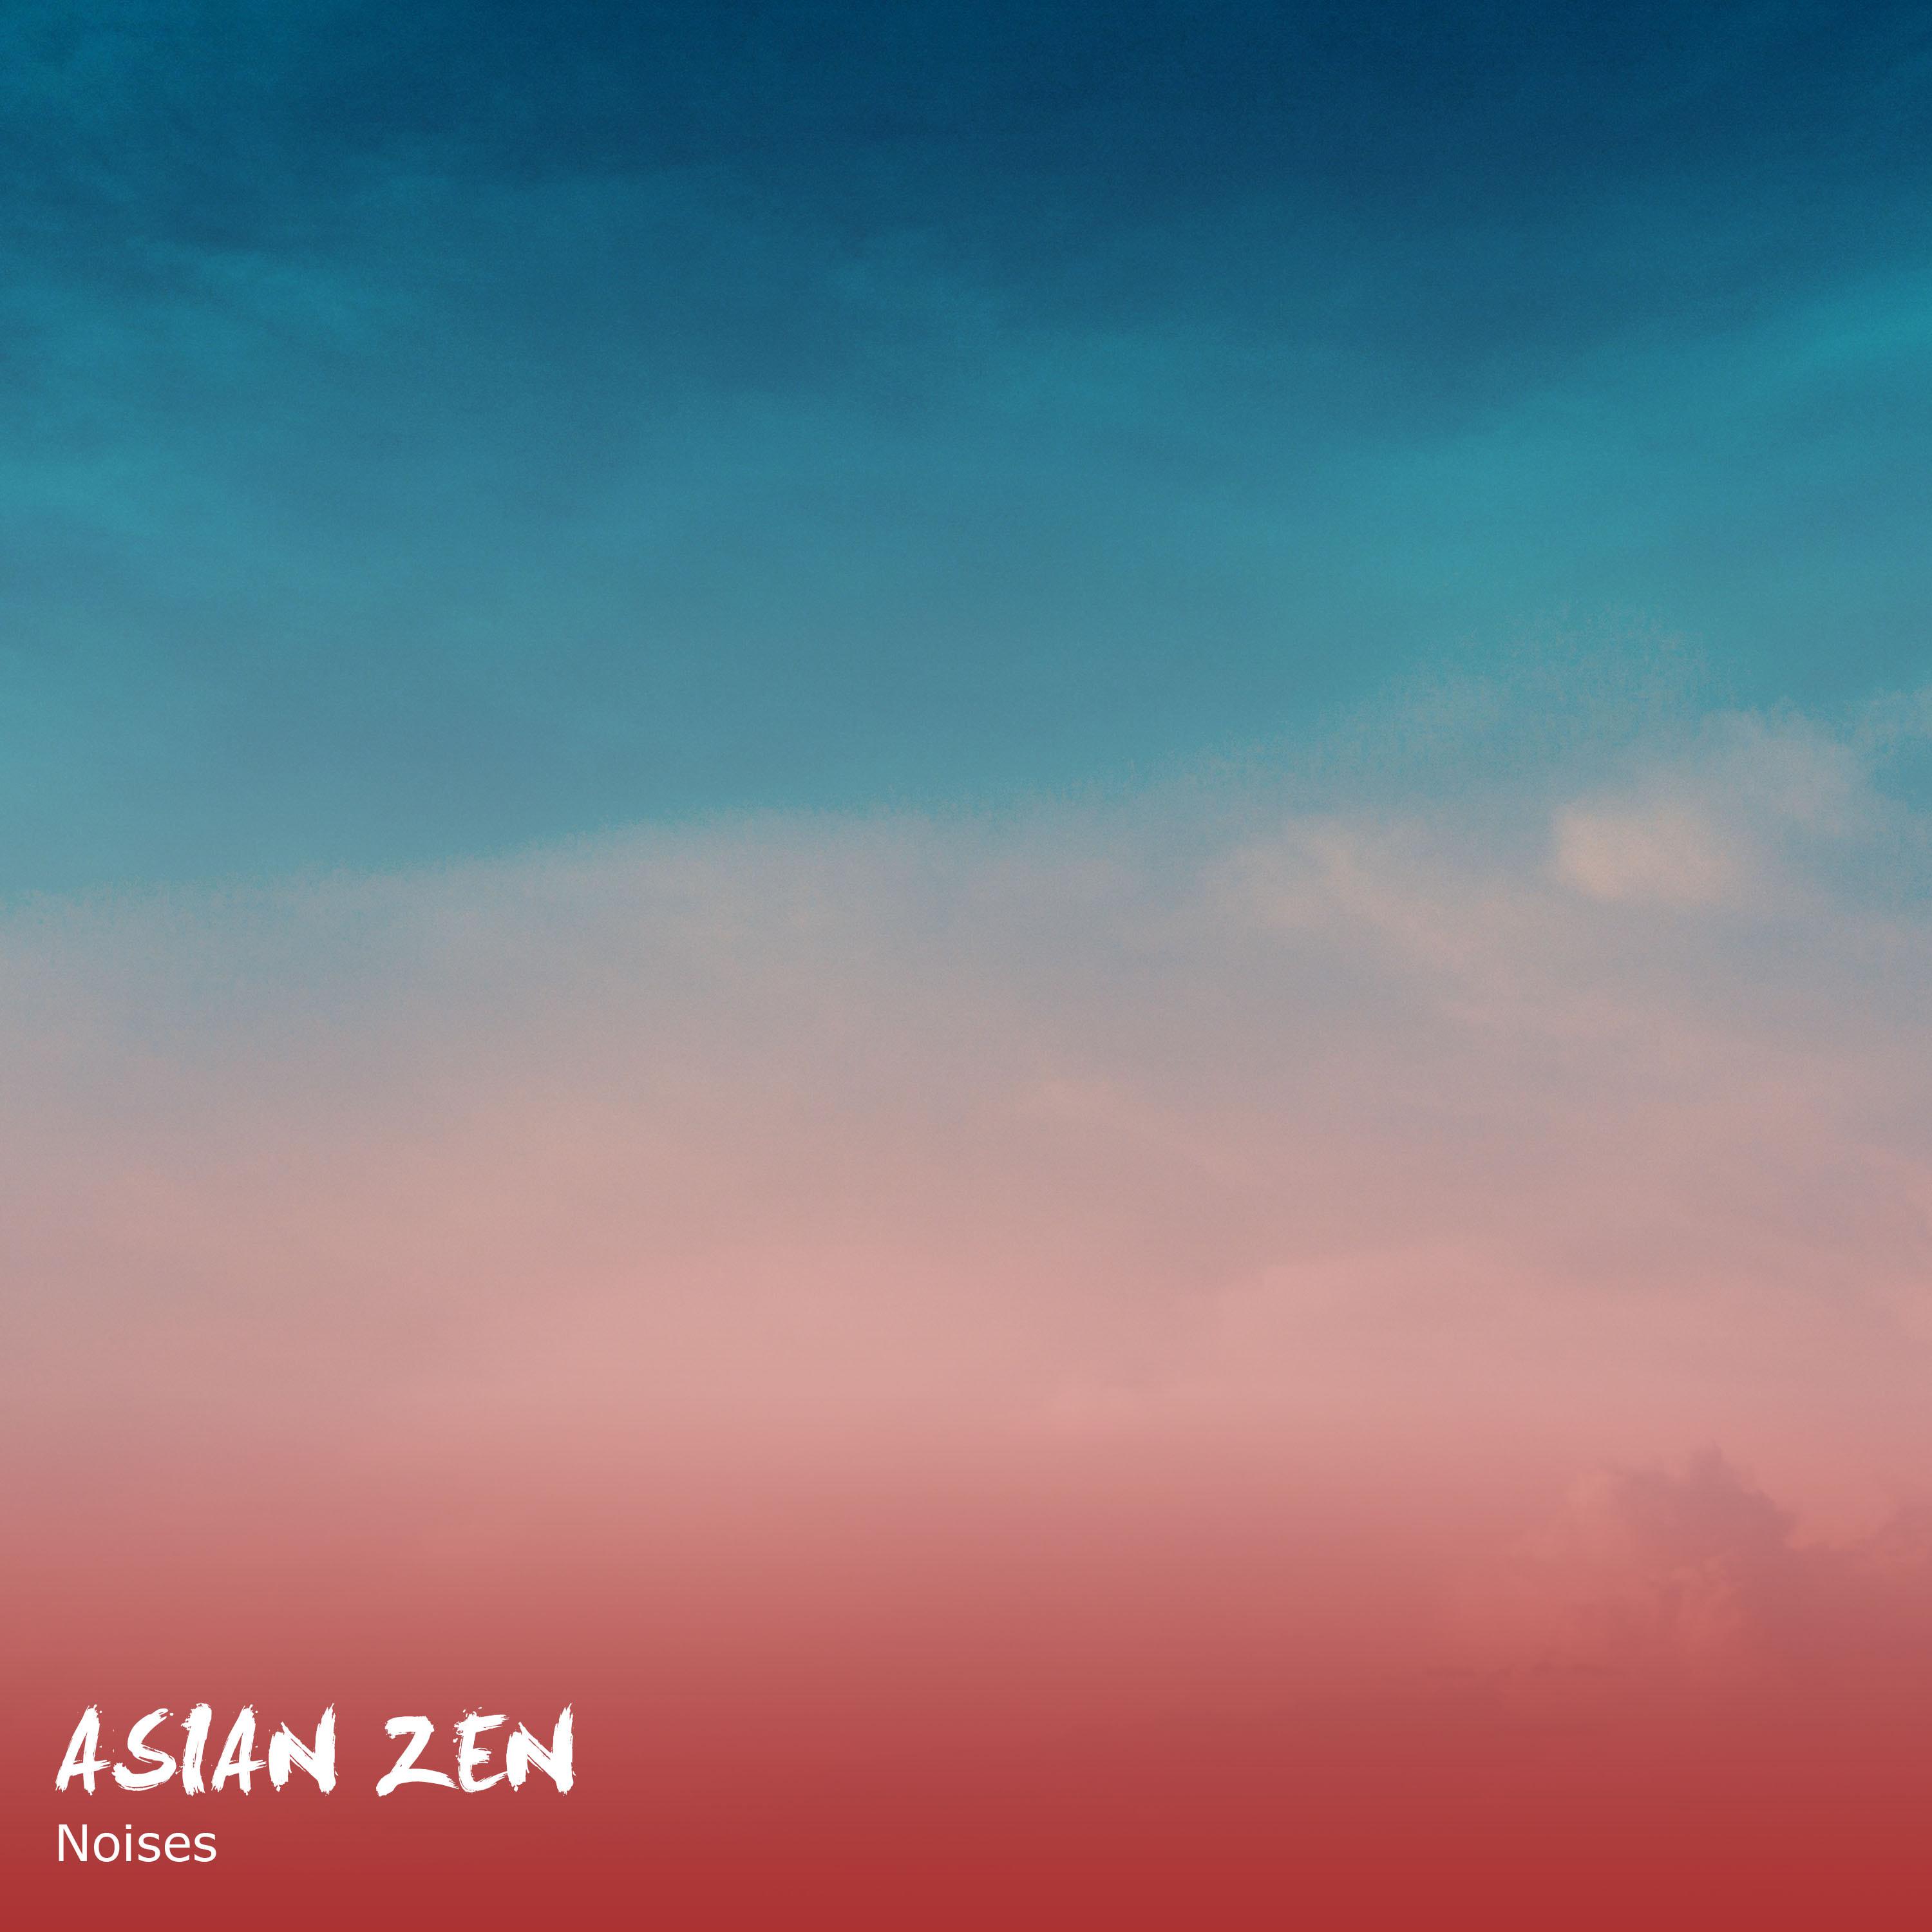 #16 Asian Zen Noises to Free the Soul